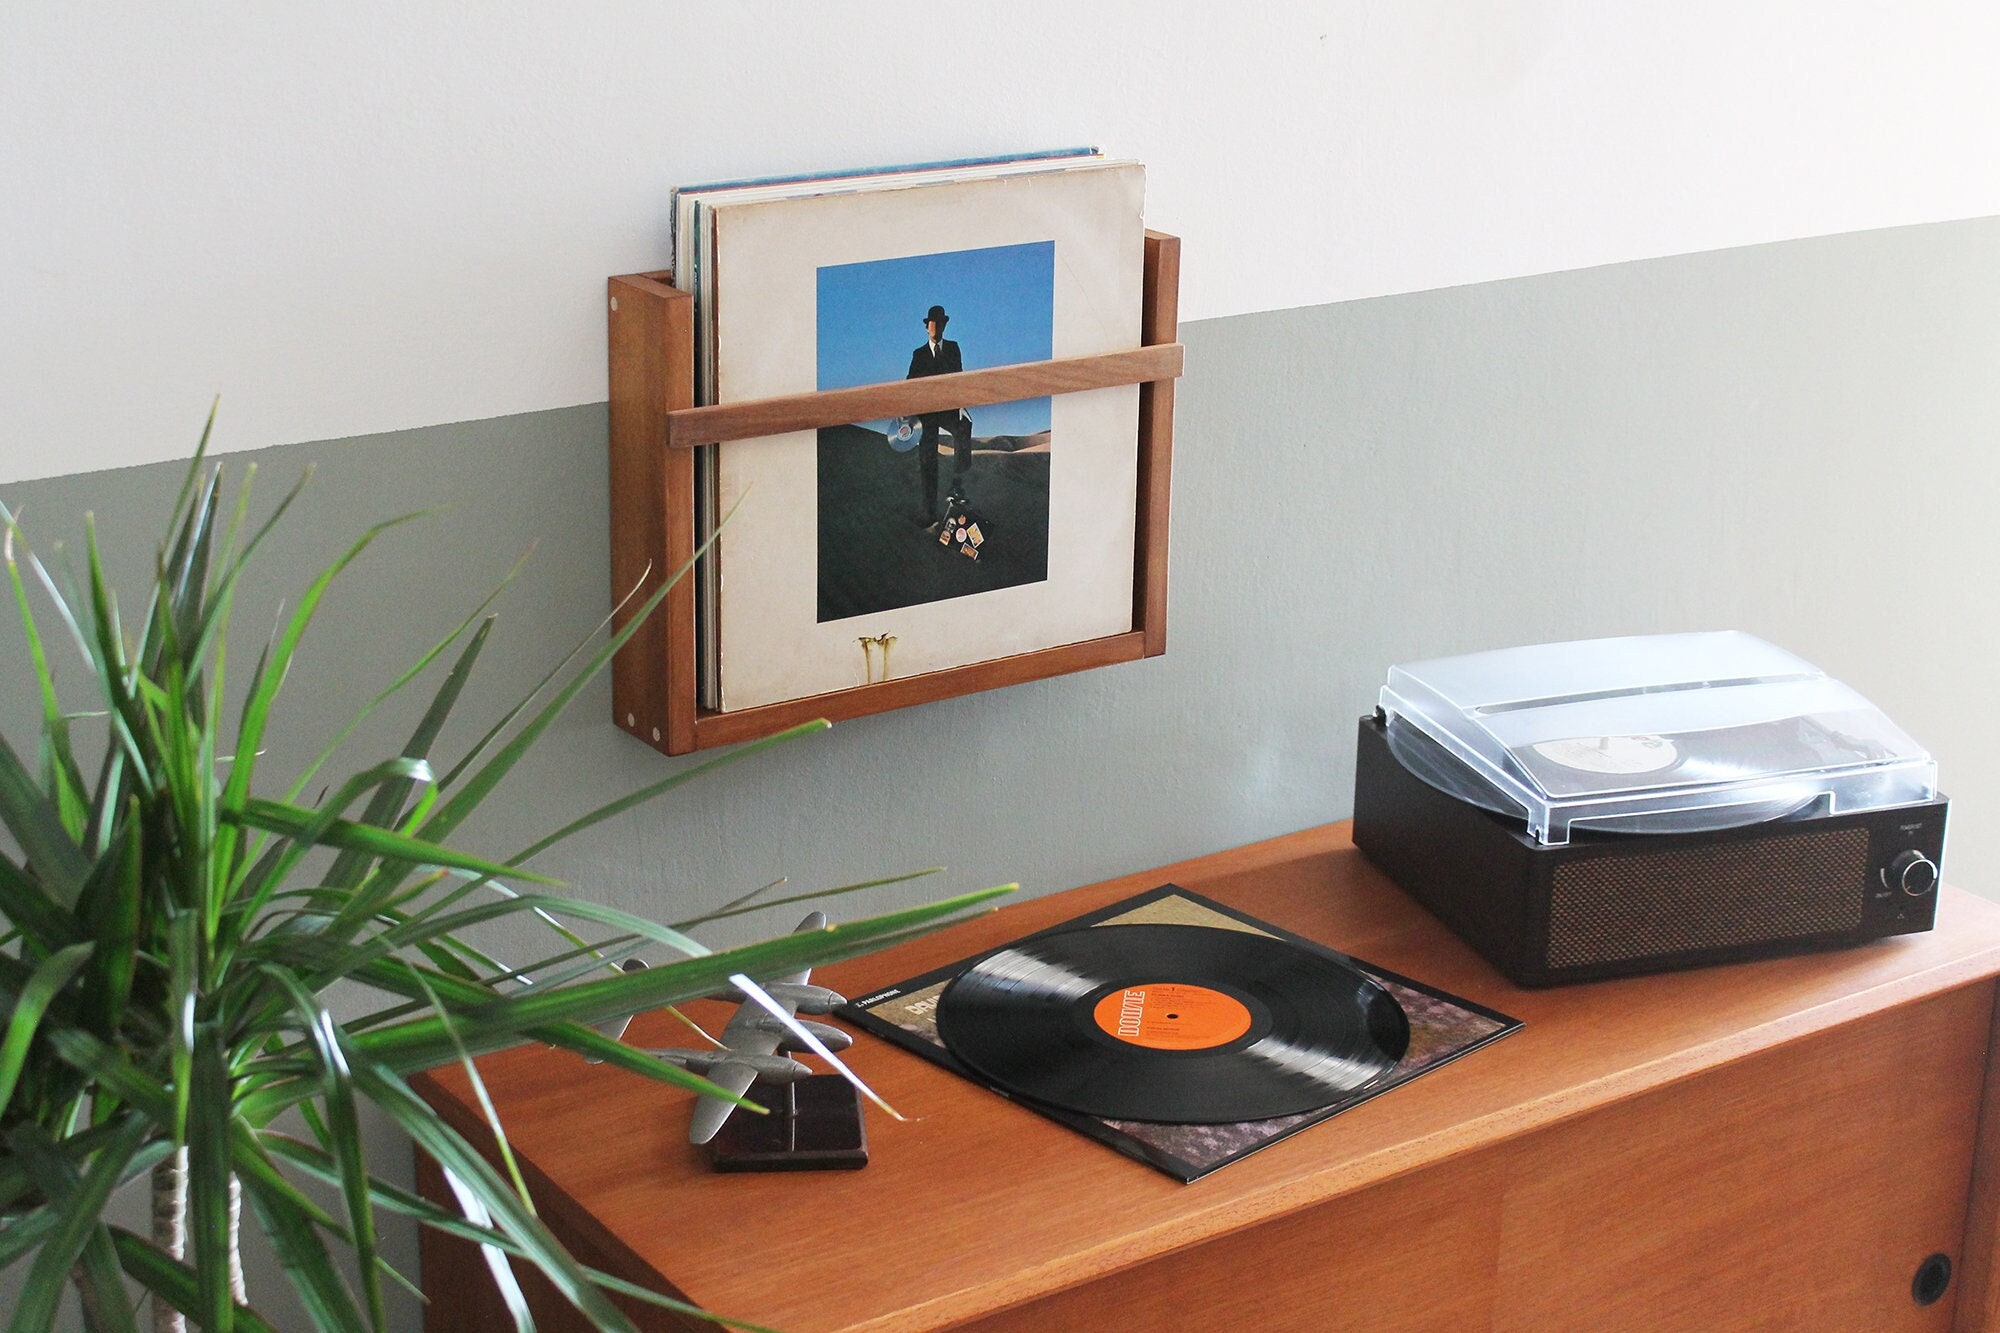 Record Shelves Set of 8 - Vinyl Shelf - Records Display - Record Frame Ledge - LP Albums Storage Wall Mount - Album Holder Organizer and Stand